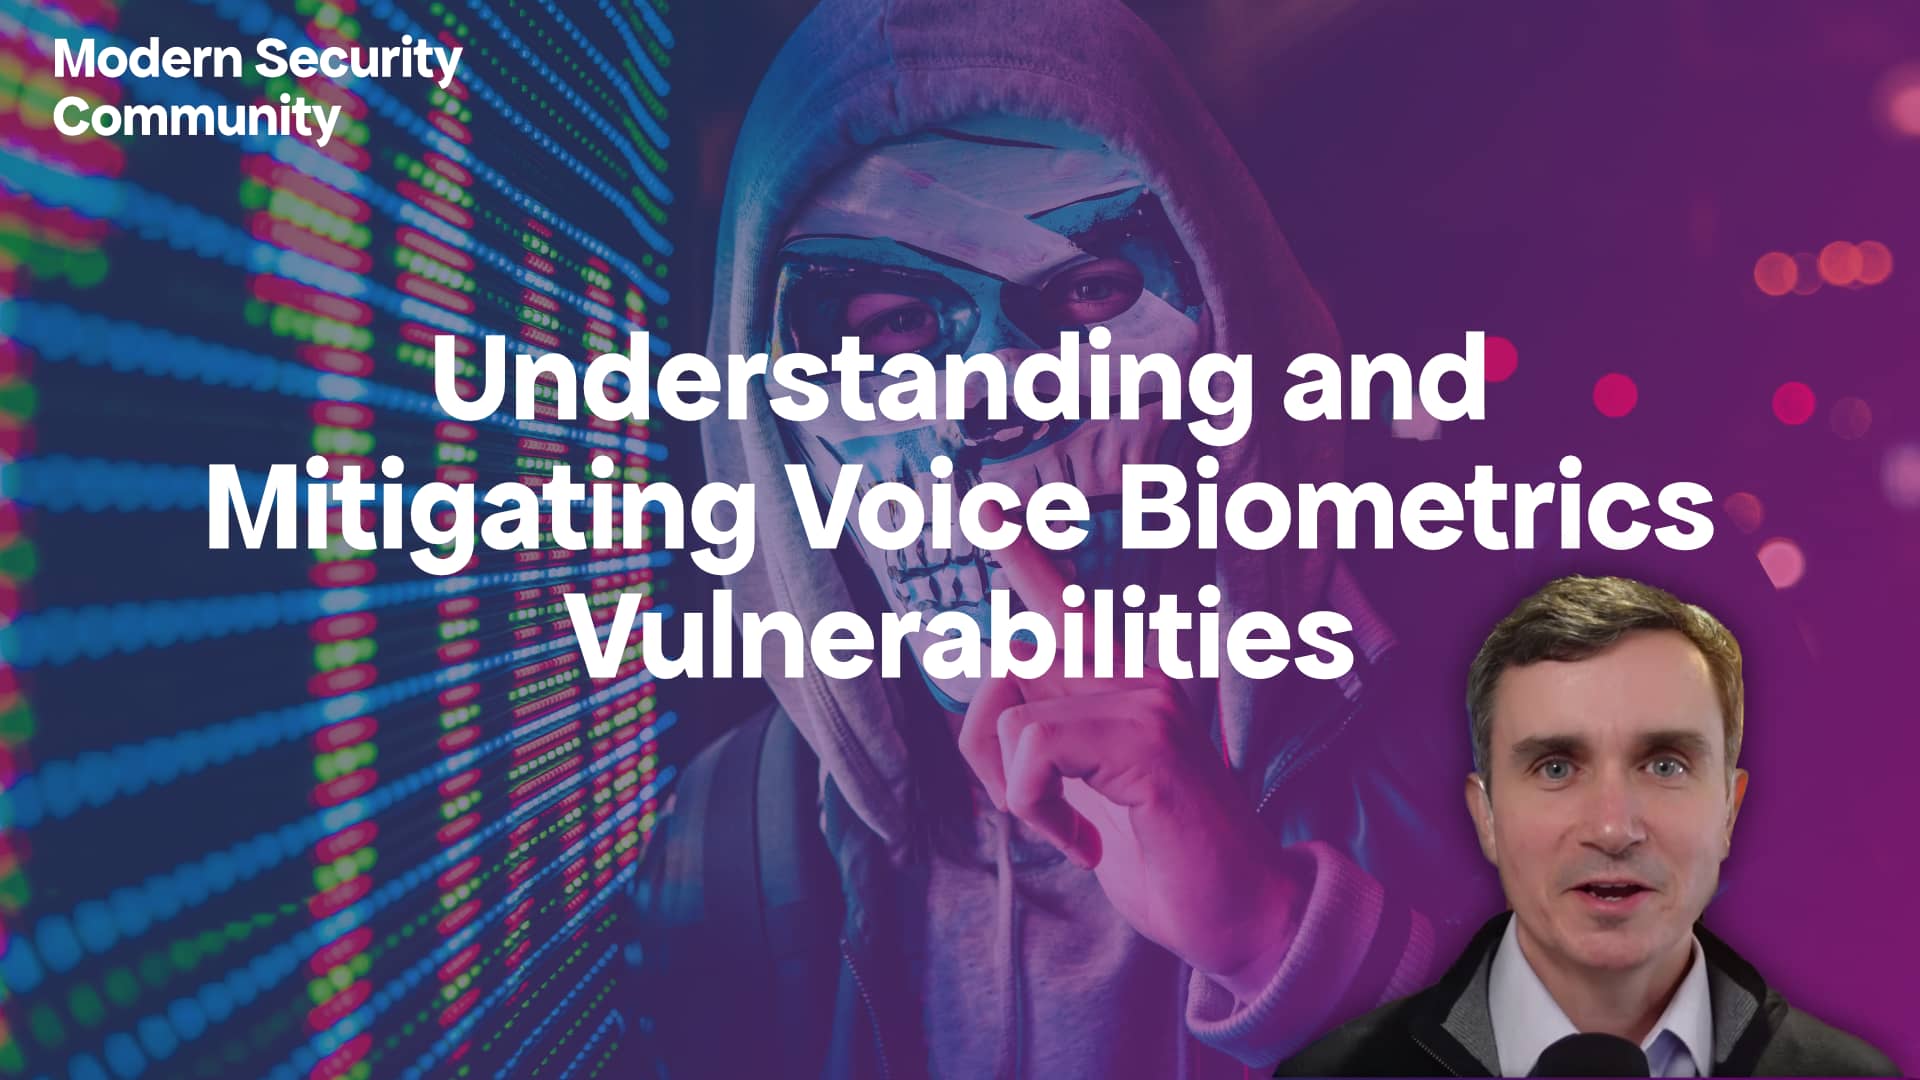 Featured image for “Understanding and Mitigating Voice Biometrics Vulnerabilities”